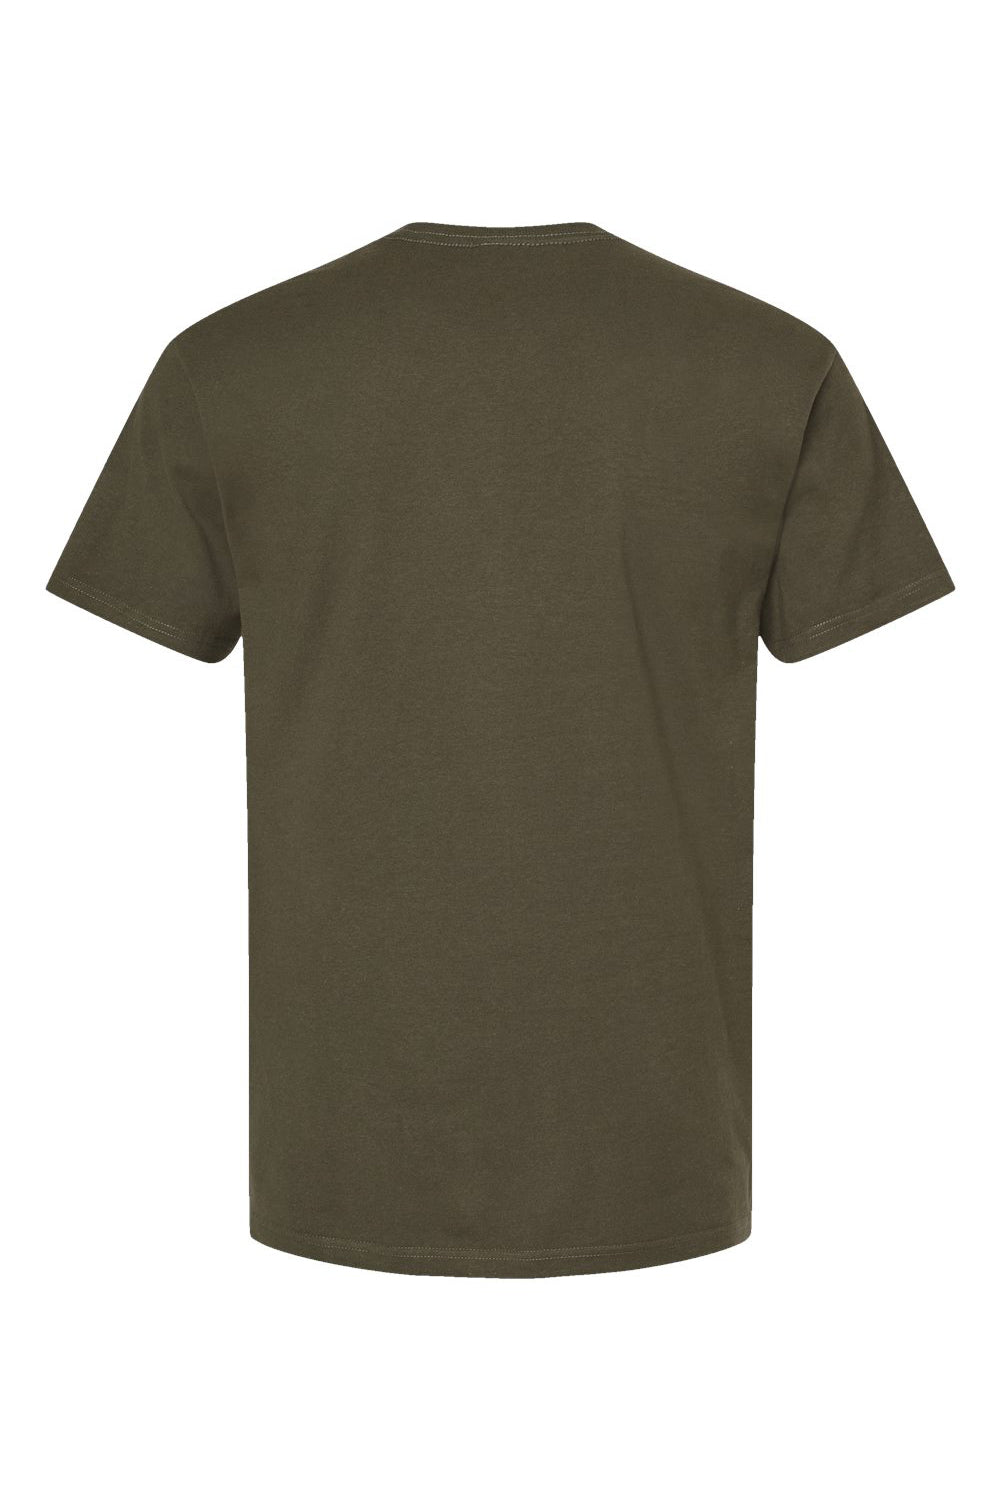 Tultex 290 Mens Jersey Short Sleeve Crewneck T-Shirt Grape Leaf Green Flat Back